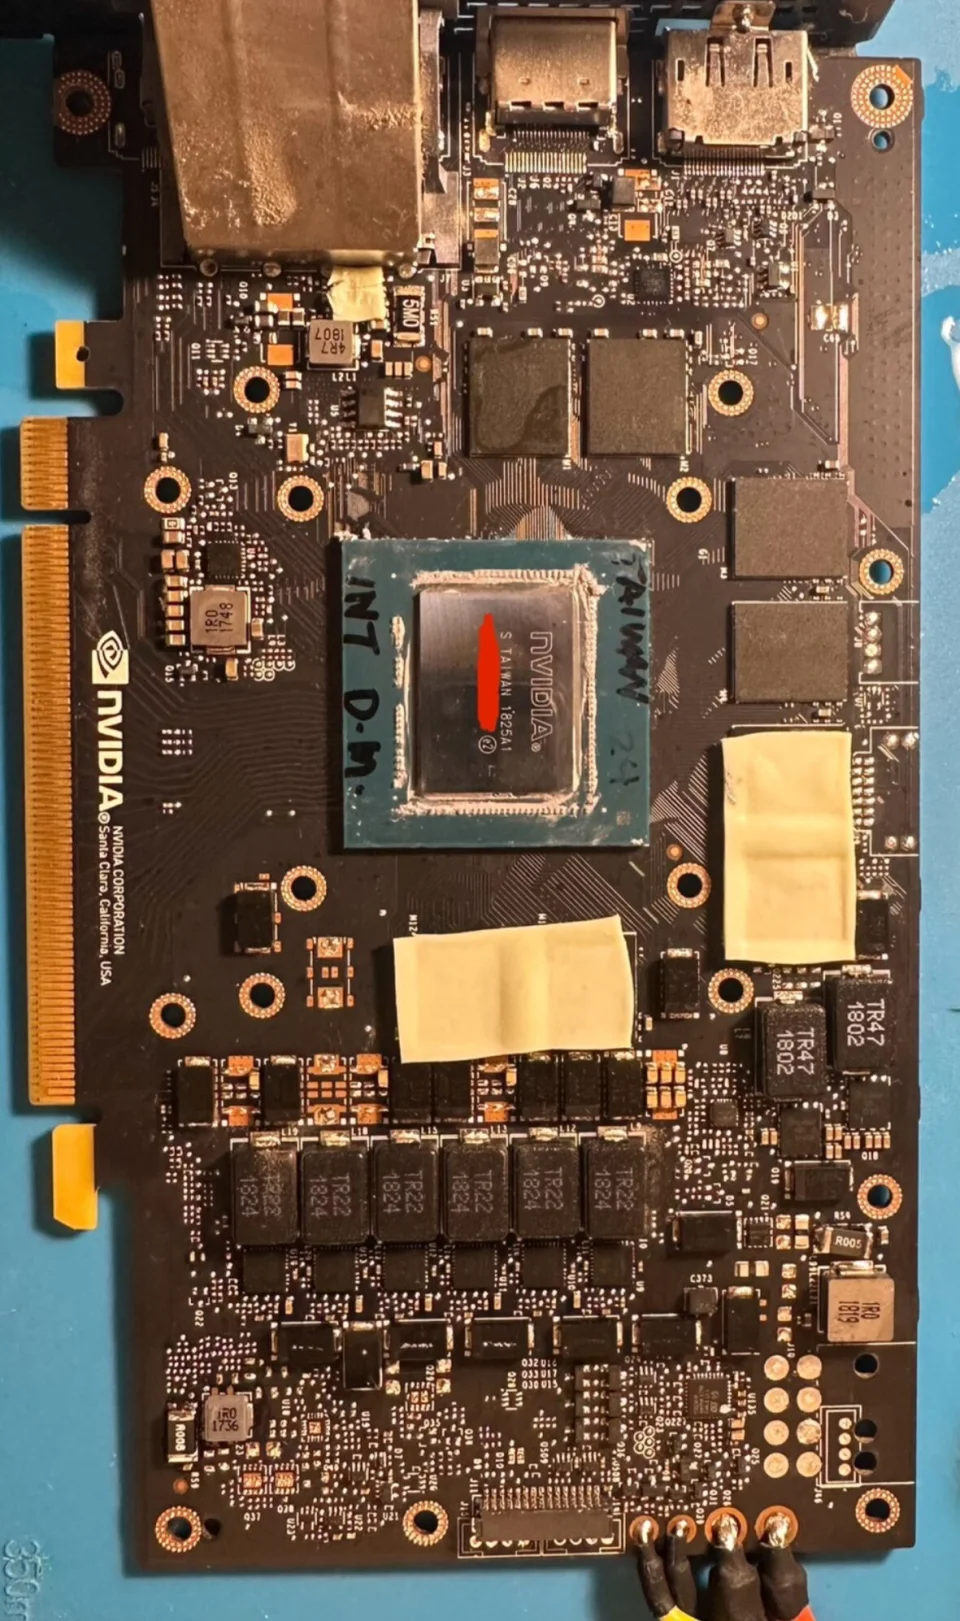 NVIDIA GeForce GTX 960：4GB vs 2GB显存——性能、价格、需求一网打尽  第1张